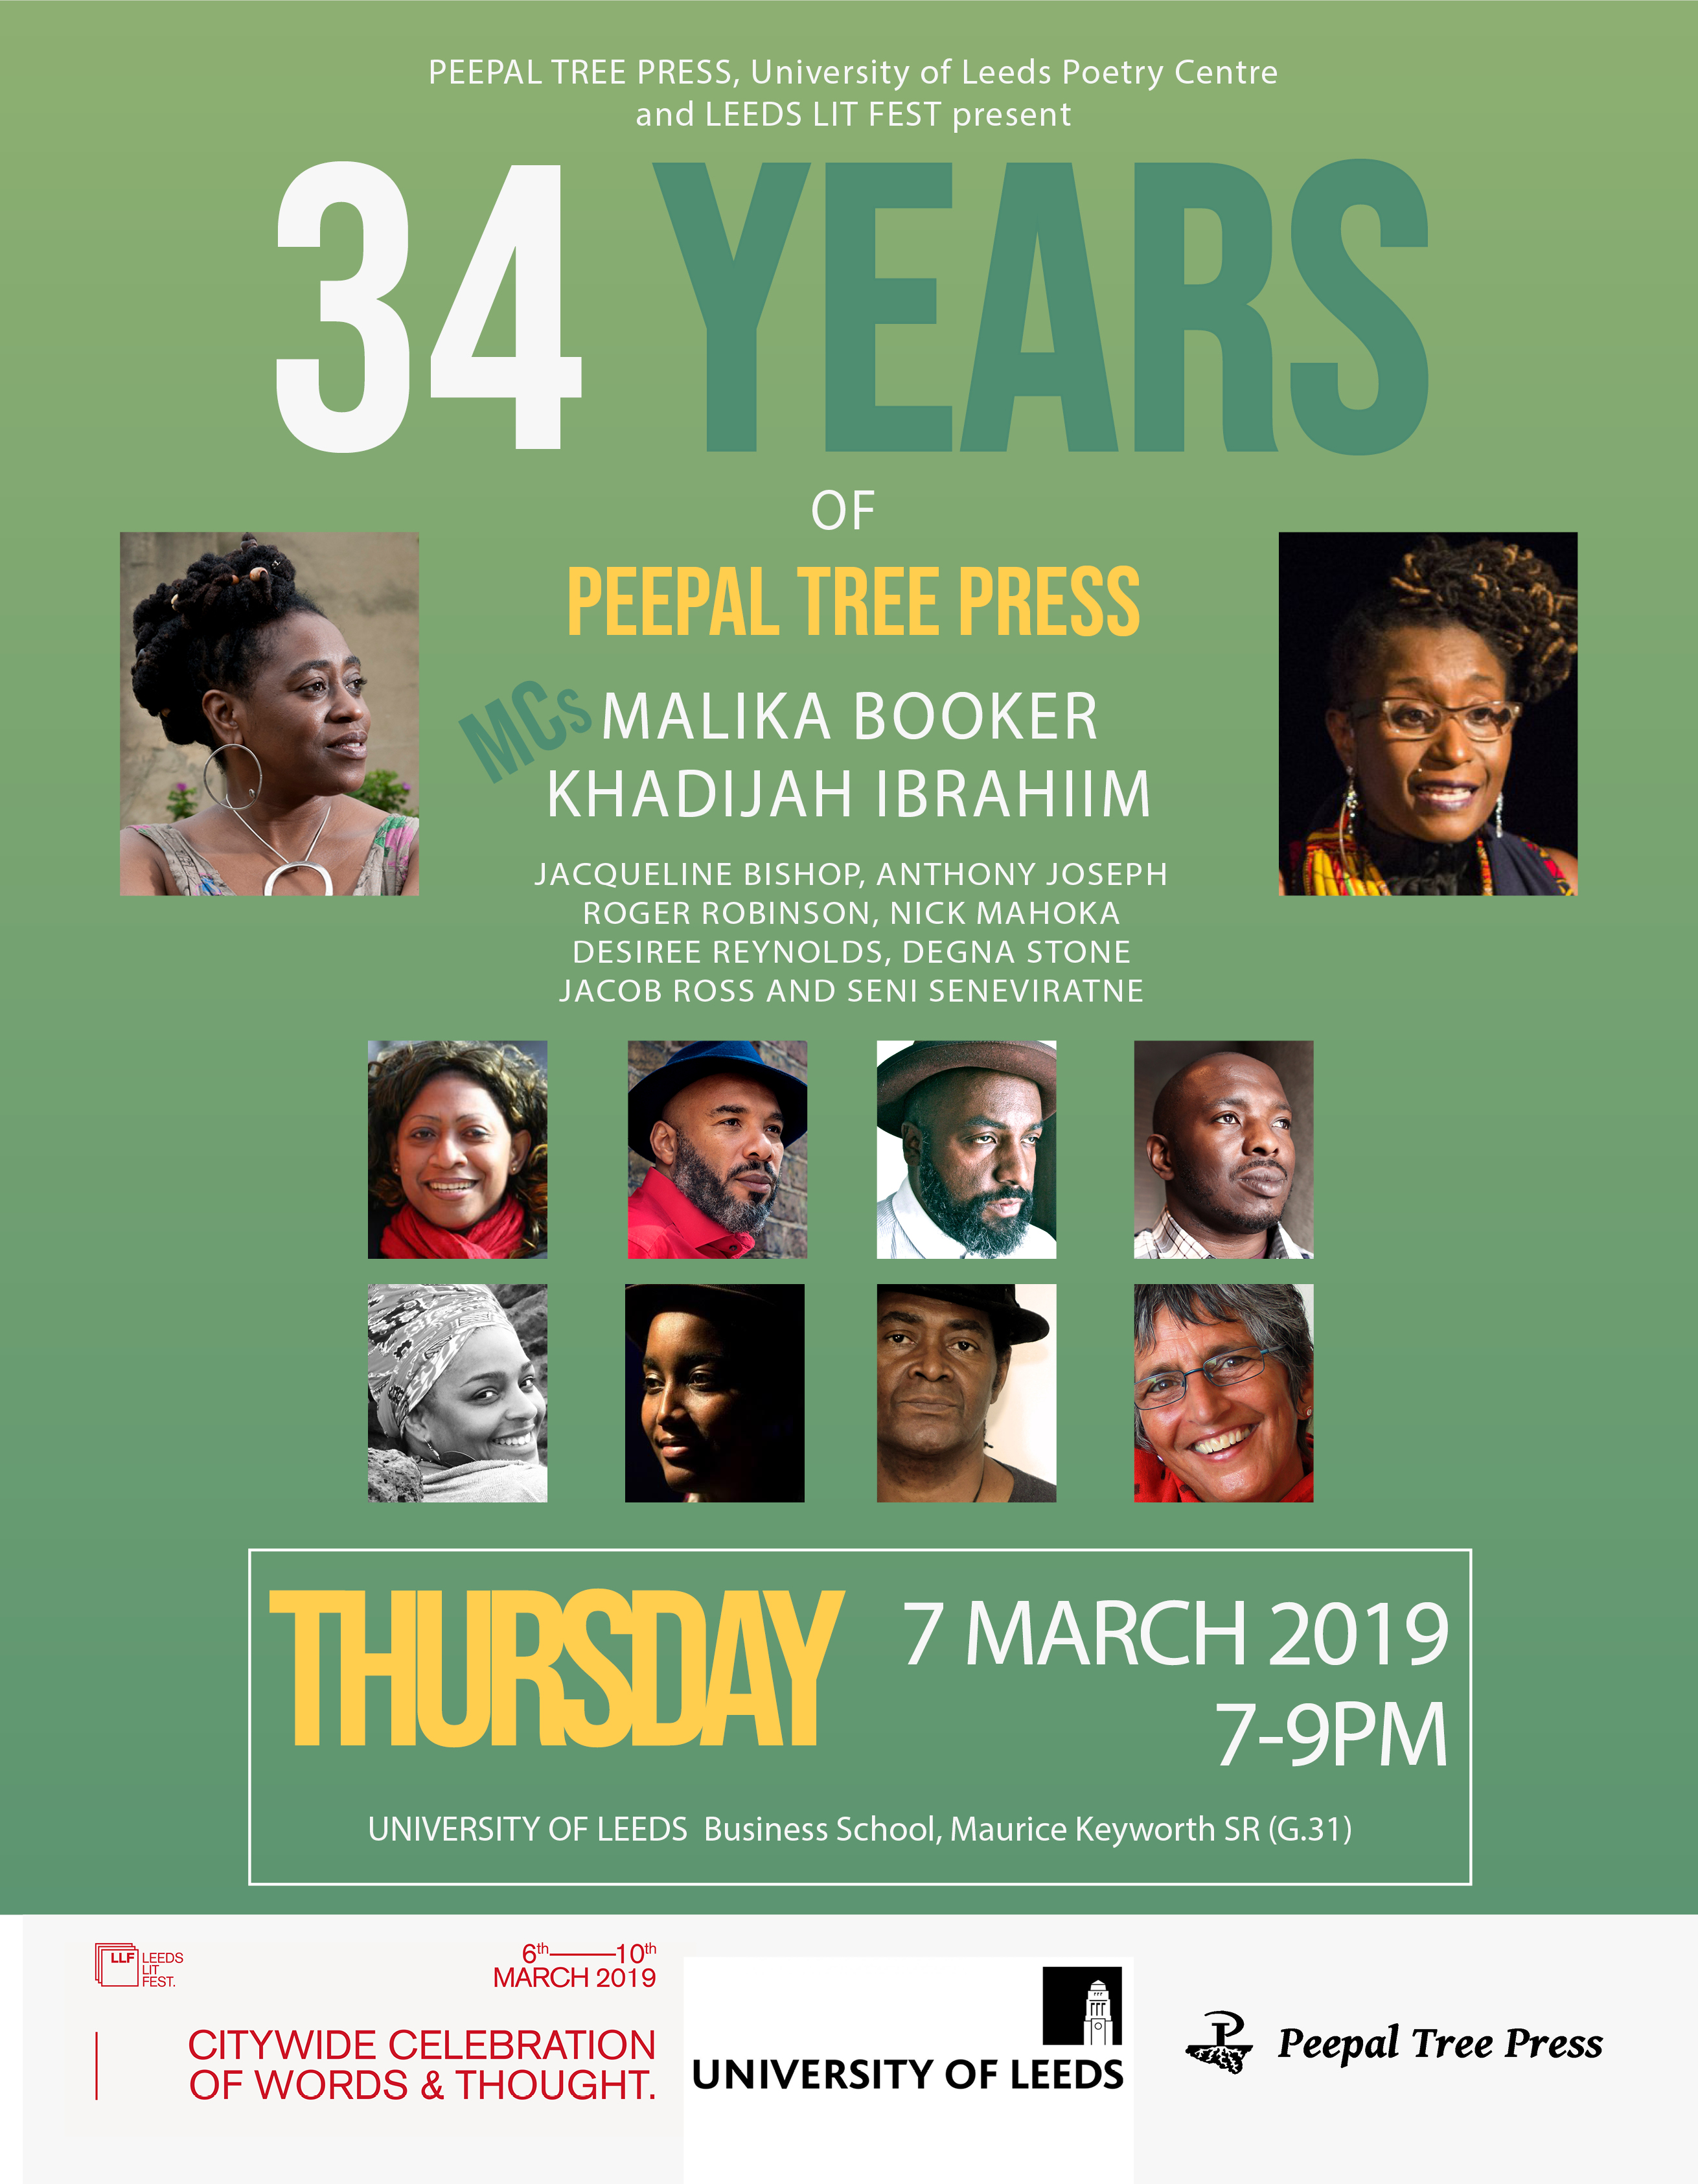 Celebrating 34 Years of Peepal Tree Press